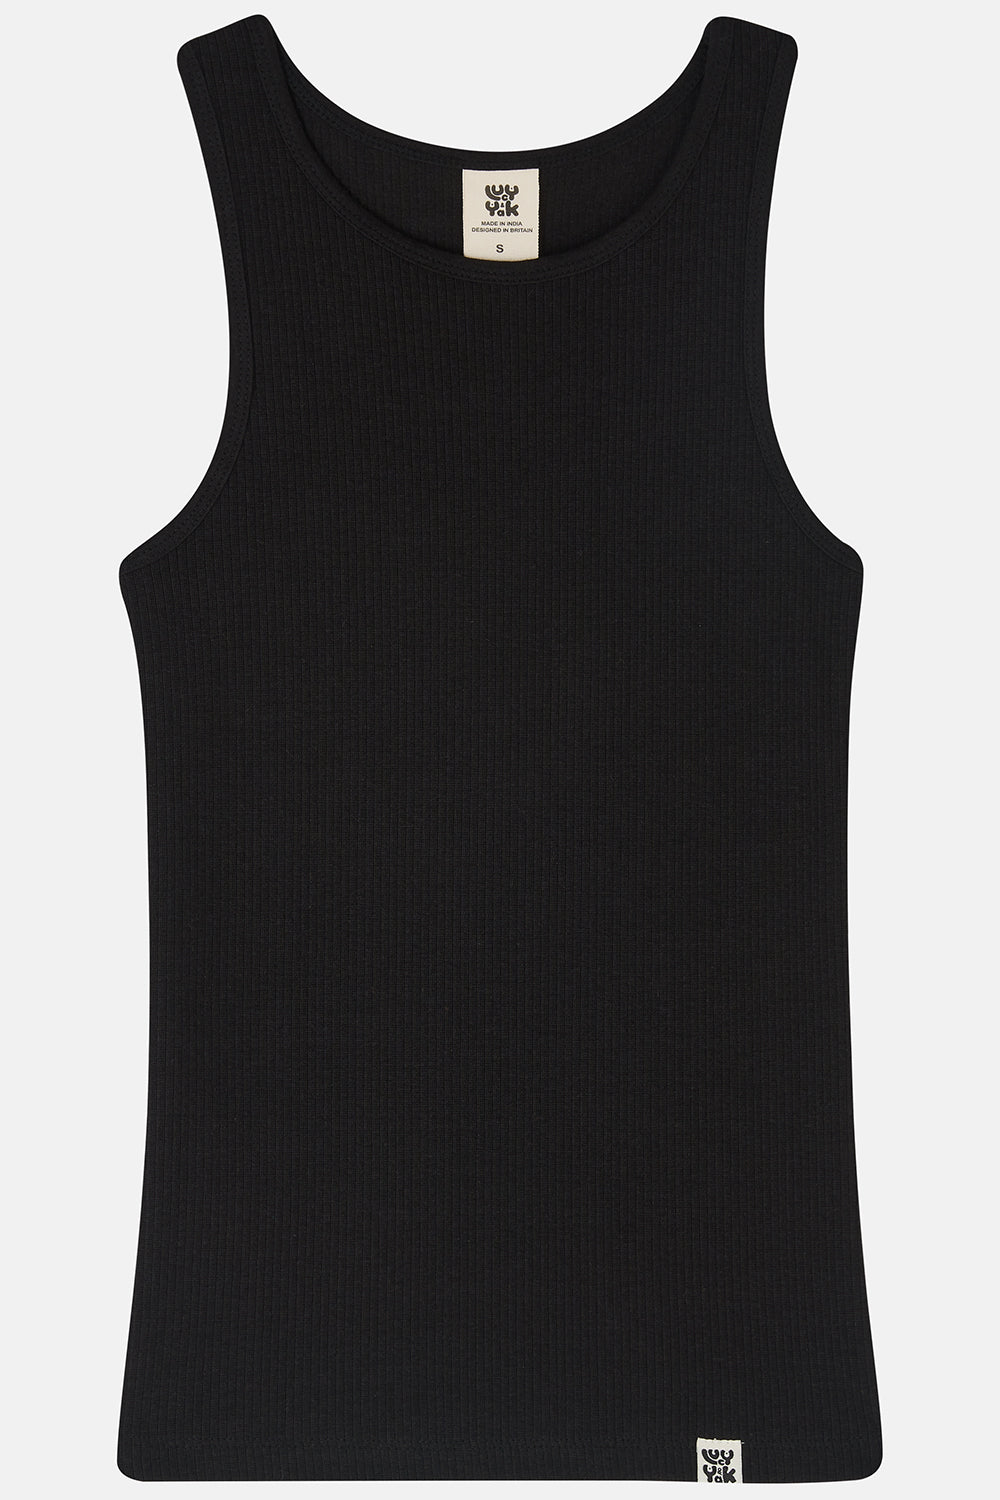 Flo Vest Top: ORGANIC COTTON & LENZING™ ECOVERO™ - Black